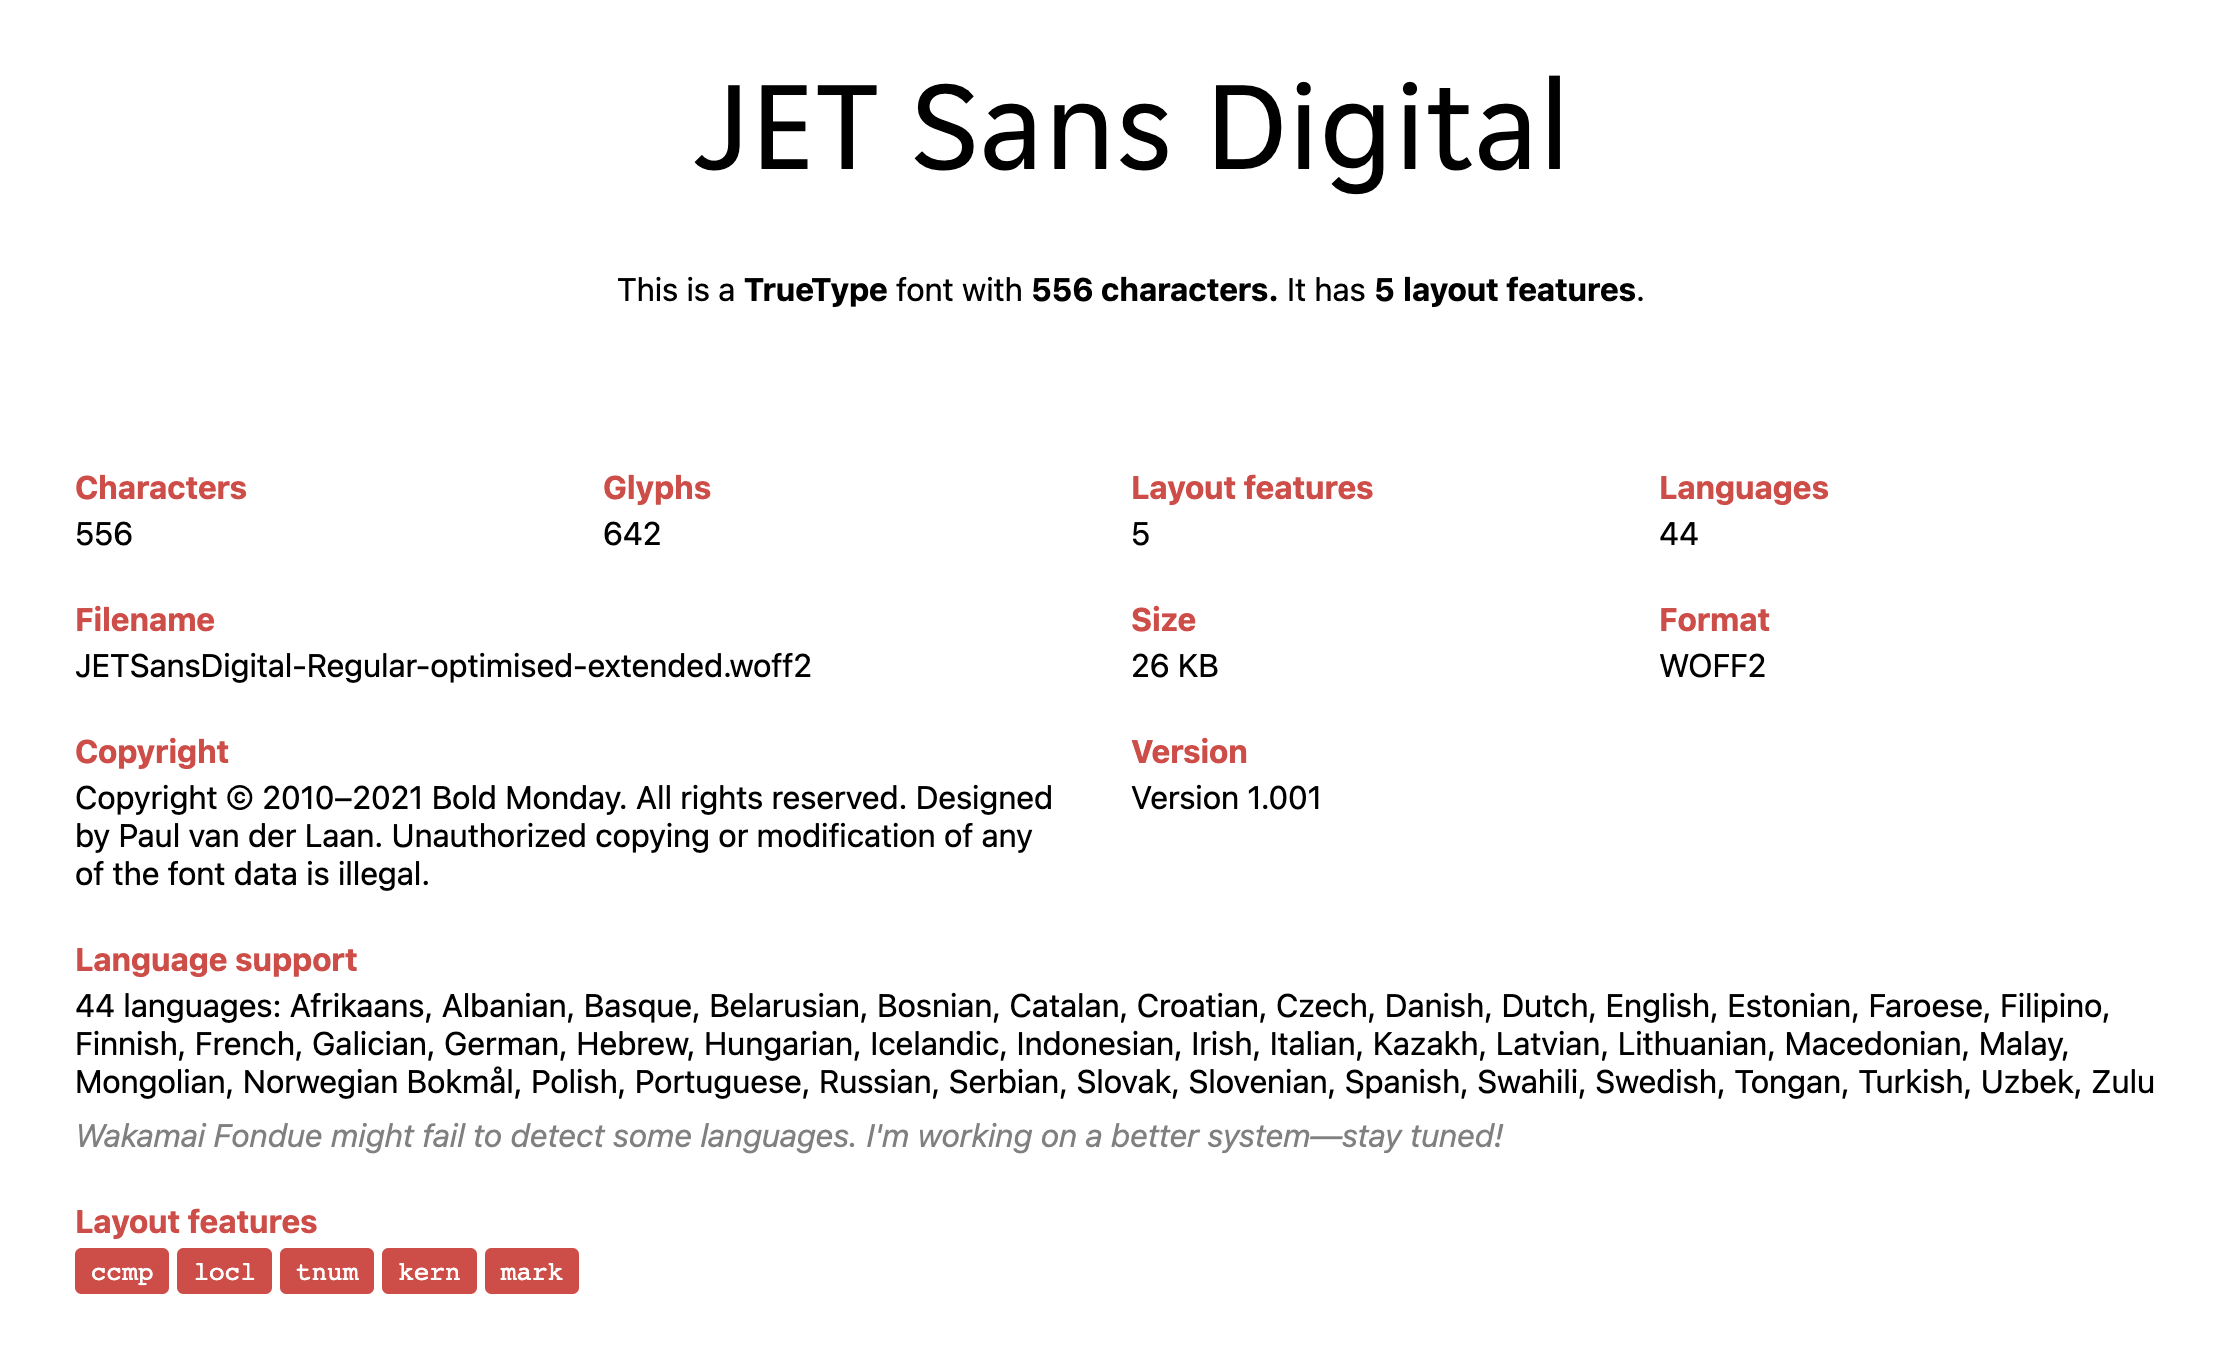 Wakamai Fondue font specification for JETSans Digital – the extended base subset